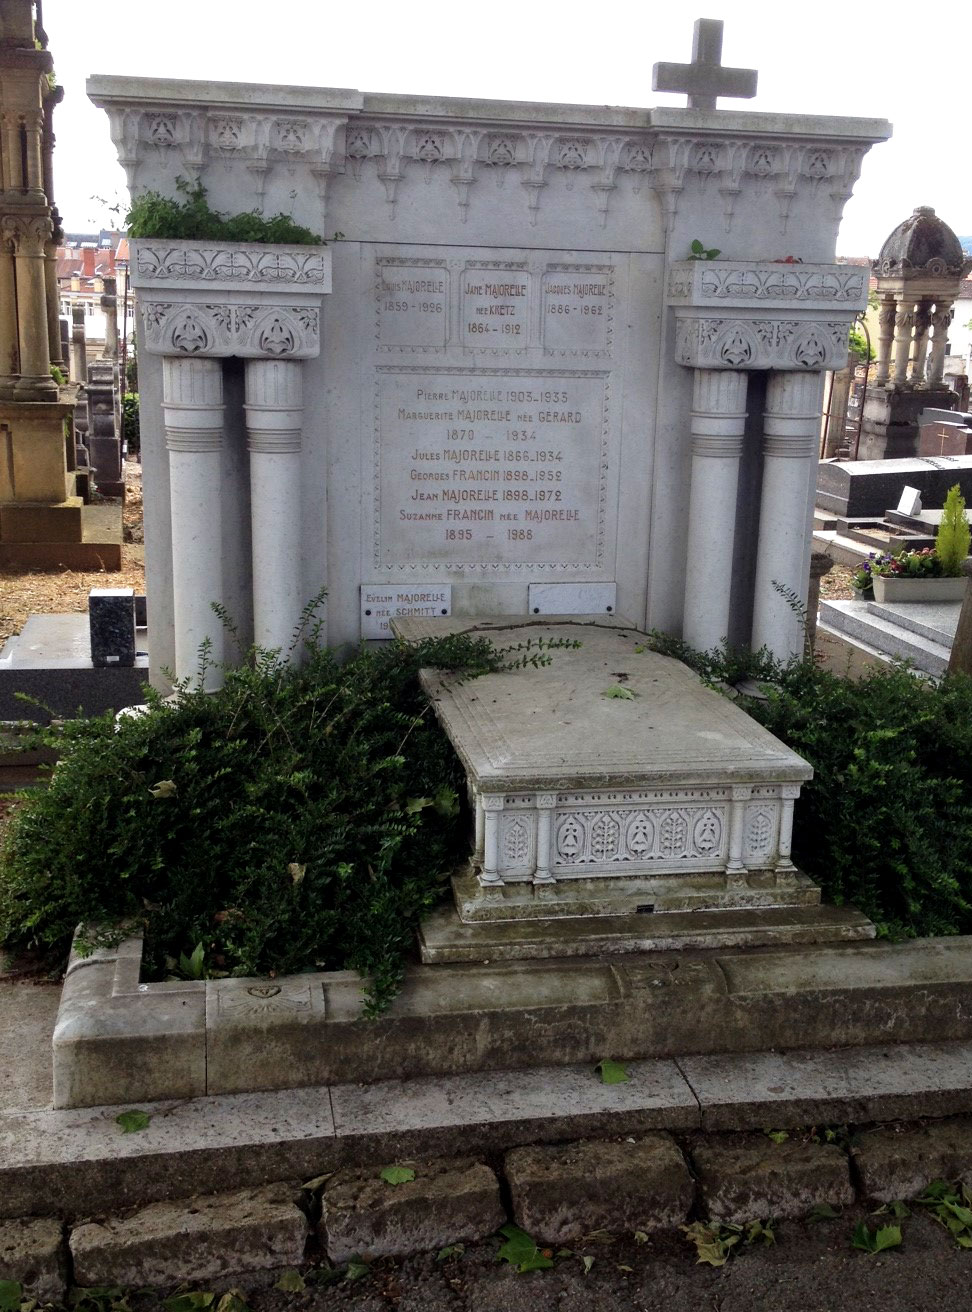 The family grave of Louis Majorelle